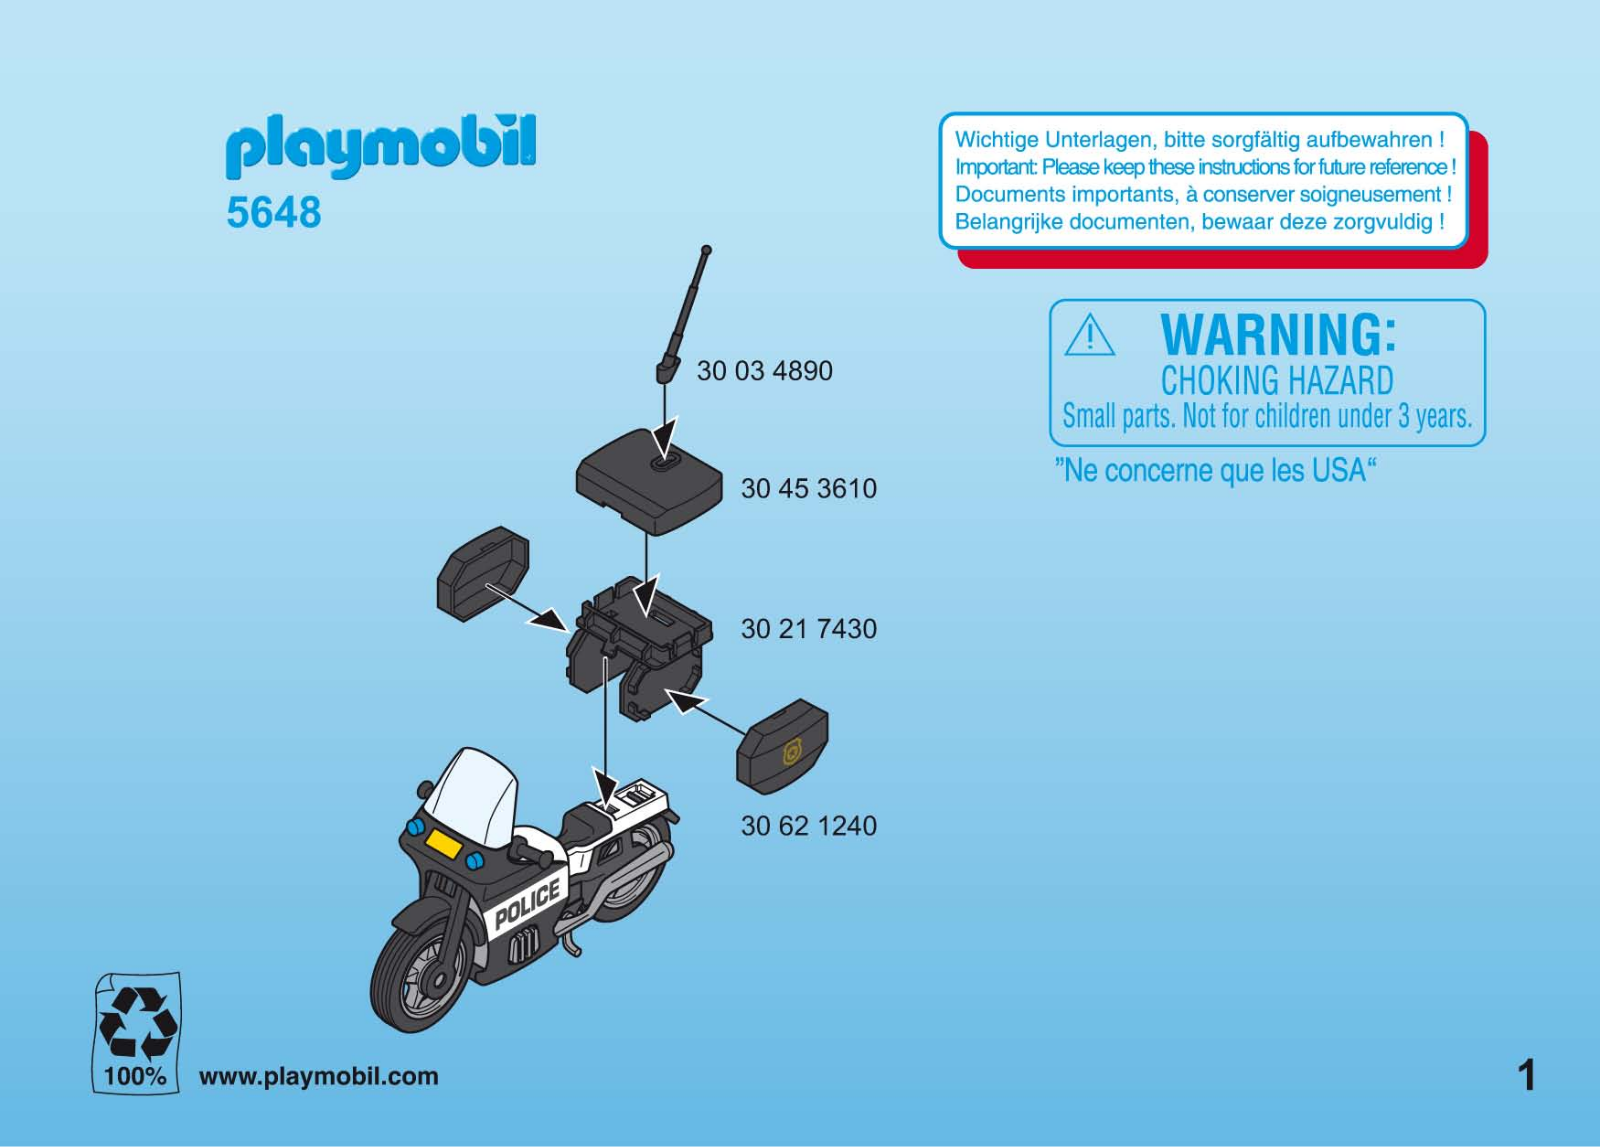 Playmobil 5648 Instructions